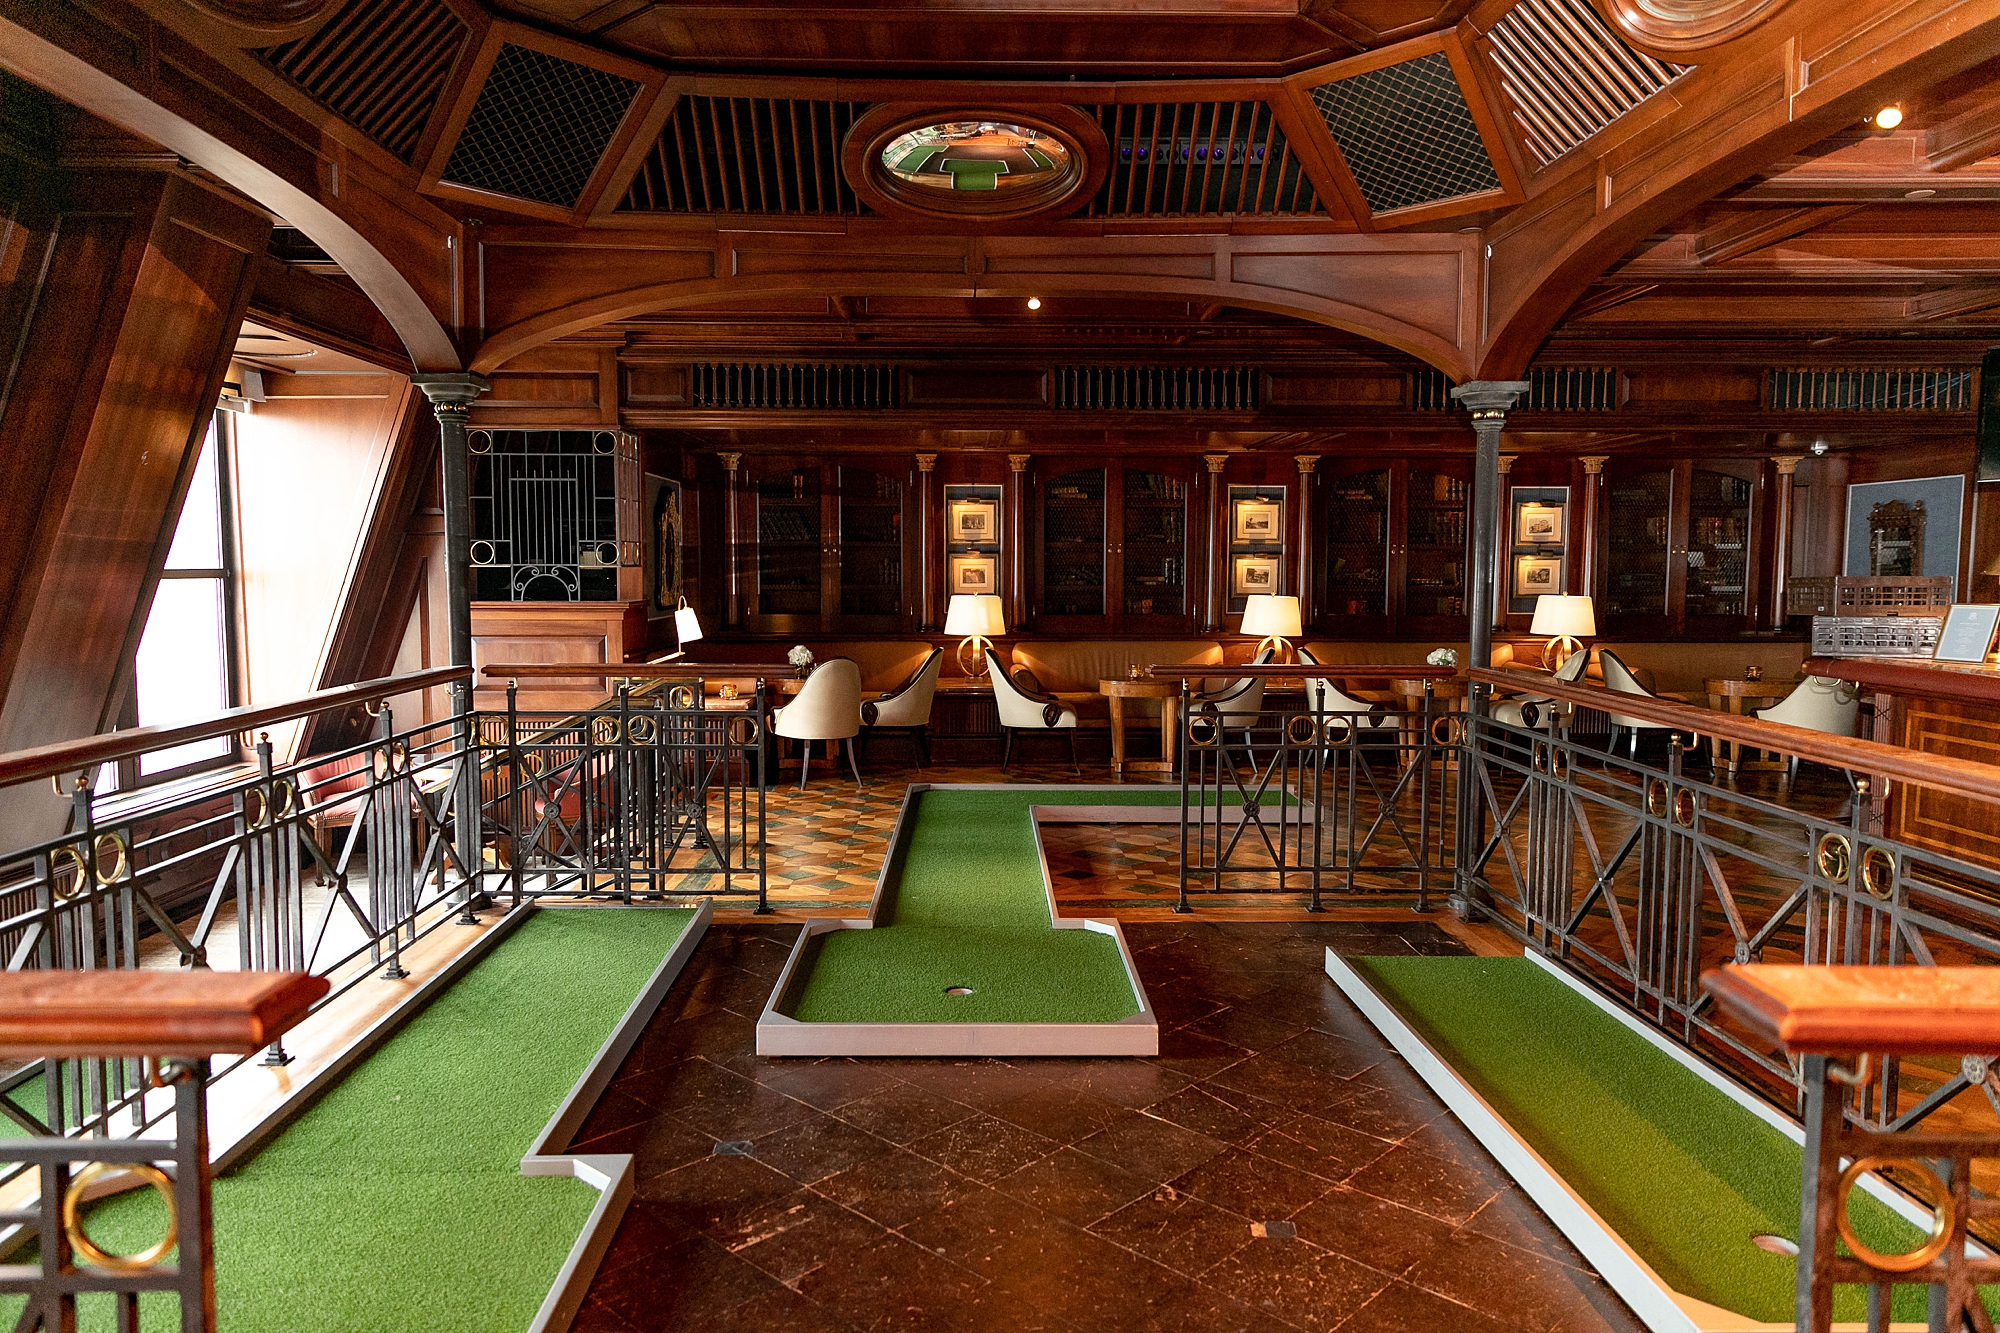 golf stations setup inside the Crescent Club